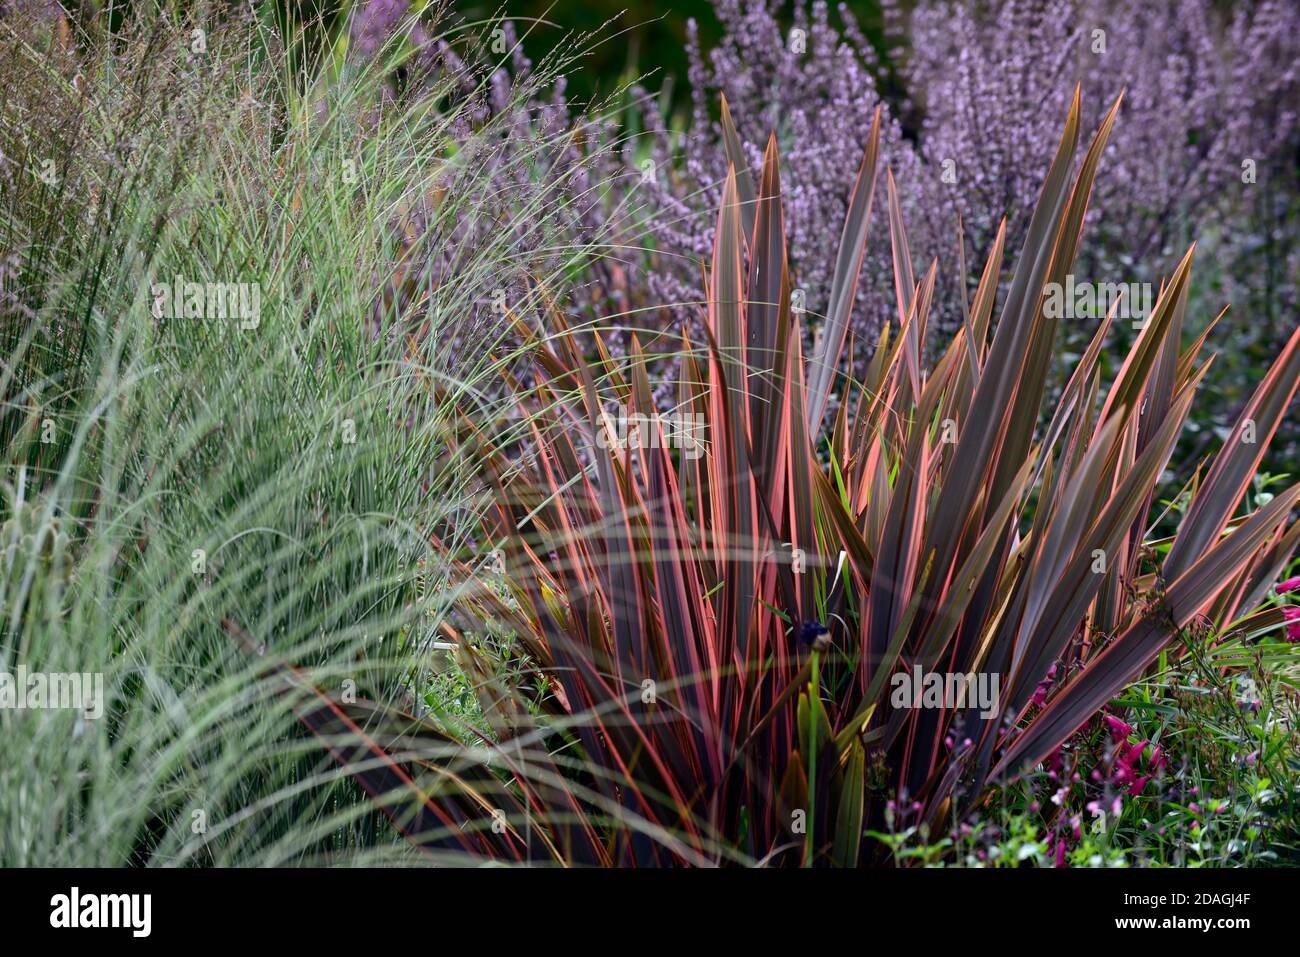 Phormium Maori Queen,New Zealand flax,Phormium Rainbow Queen,mixed grasses,grass,nepeta nuda,miscanthus,dry garden,gravel garden,flowers,flowering,gar Stock Photo